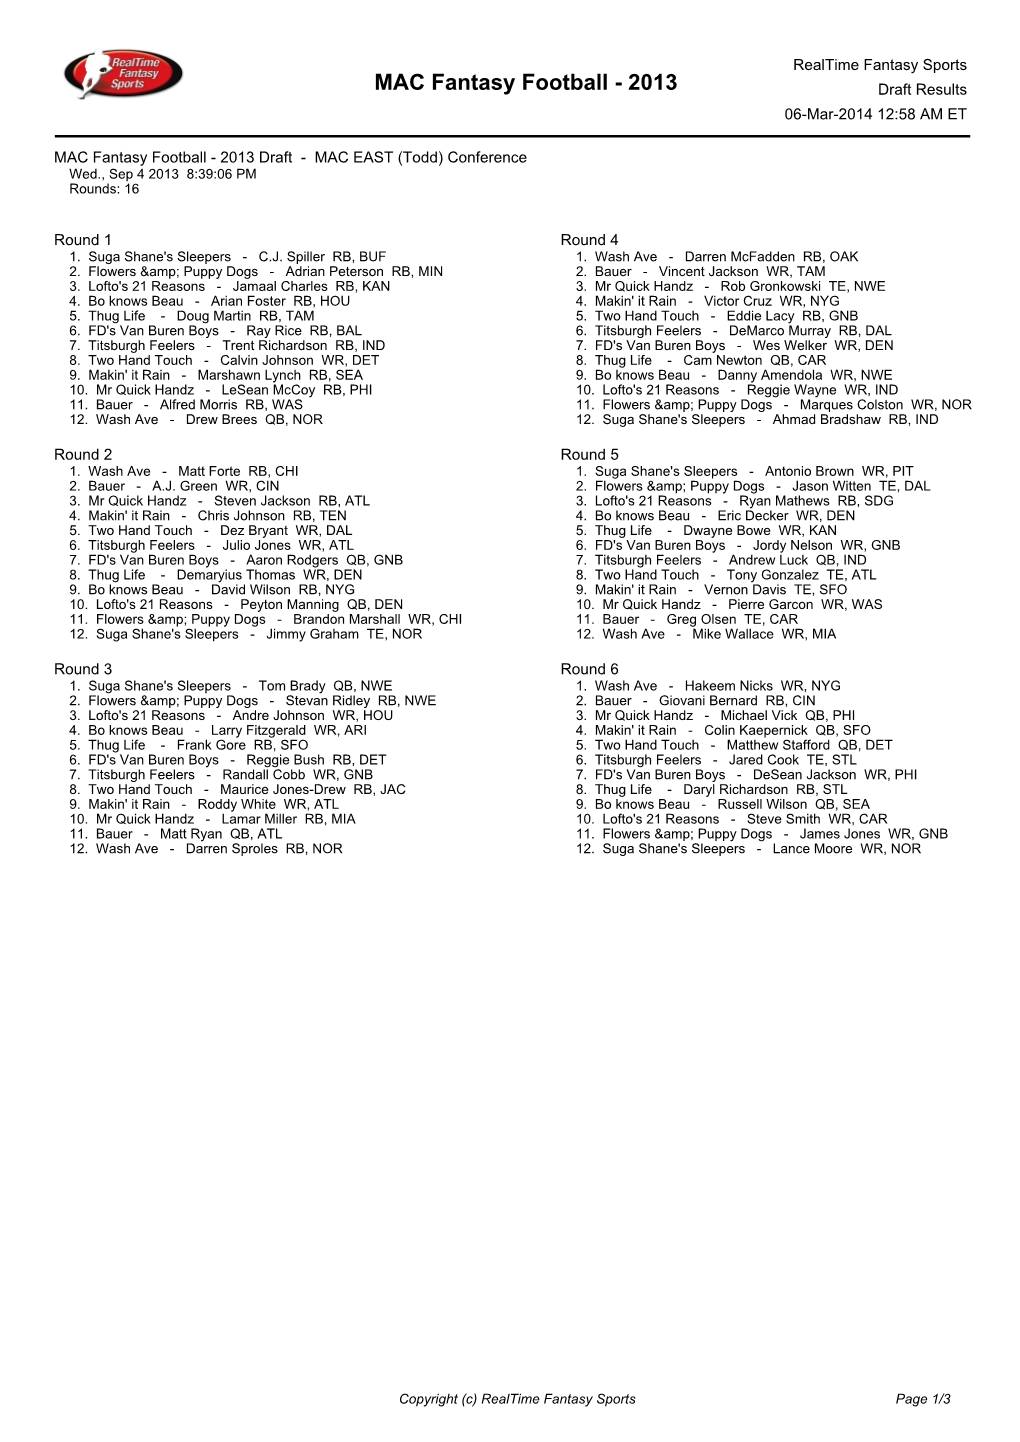 MAC Fantasy Football - 2013 Draft Results 06-Mar-2014 12:58 AM ET